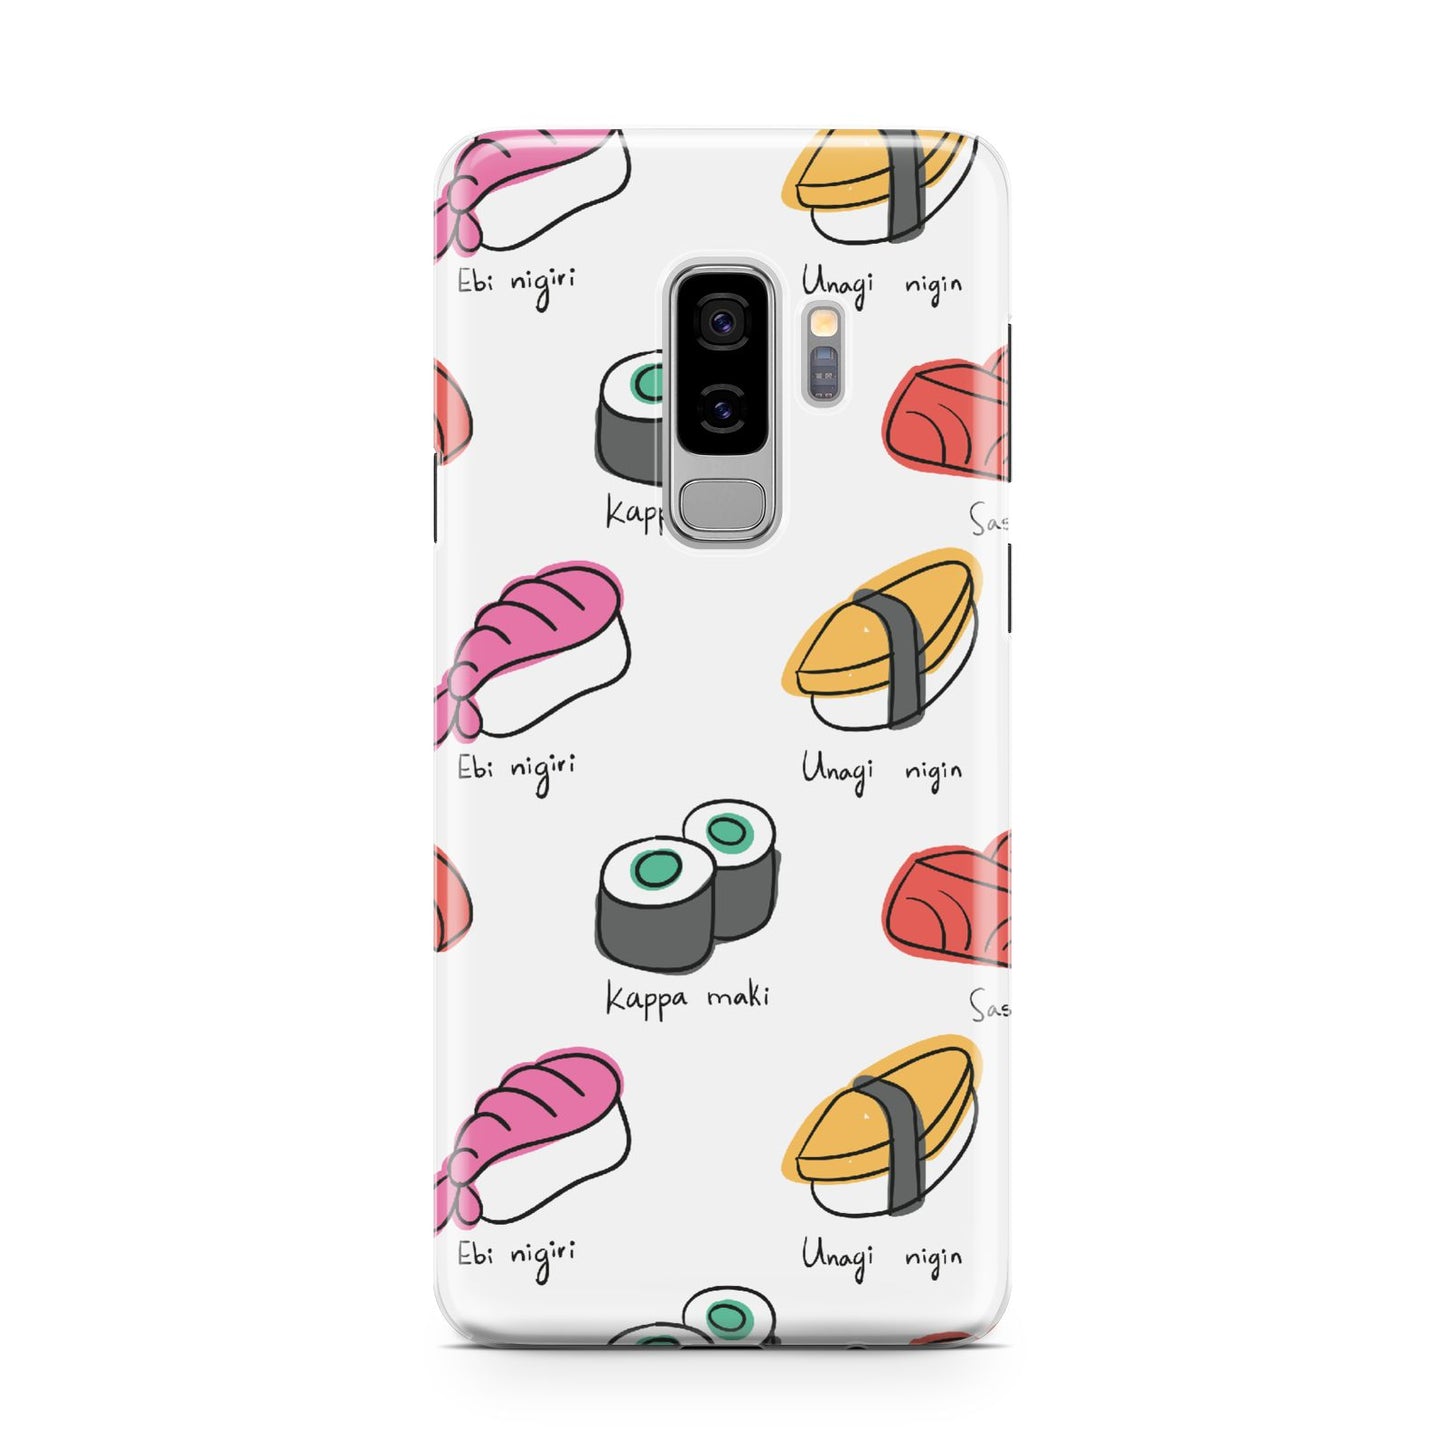 Sashimi Kappa Maki Sushi Samsung Galaxy S9 Plus Case on Silver phone